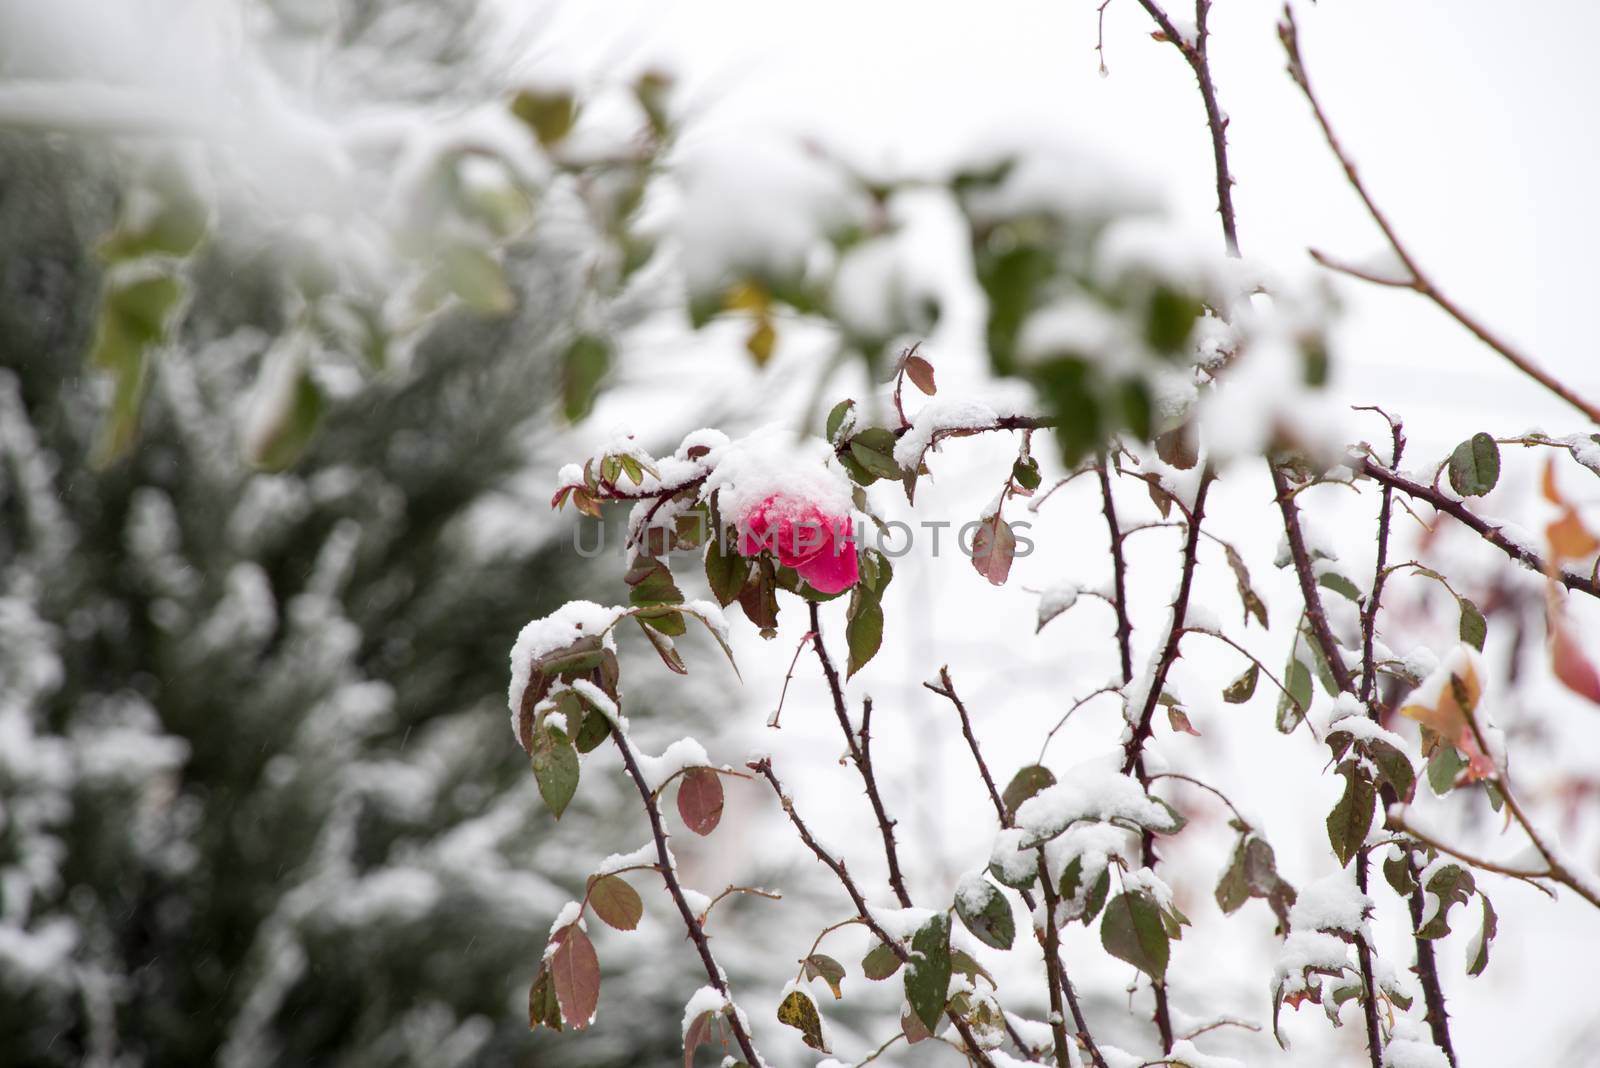 Flowers under white snow in winter closeup by elina_chernikova